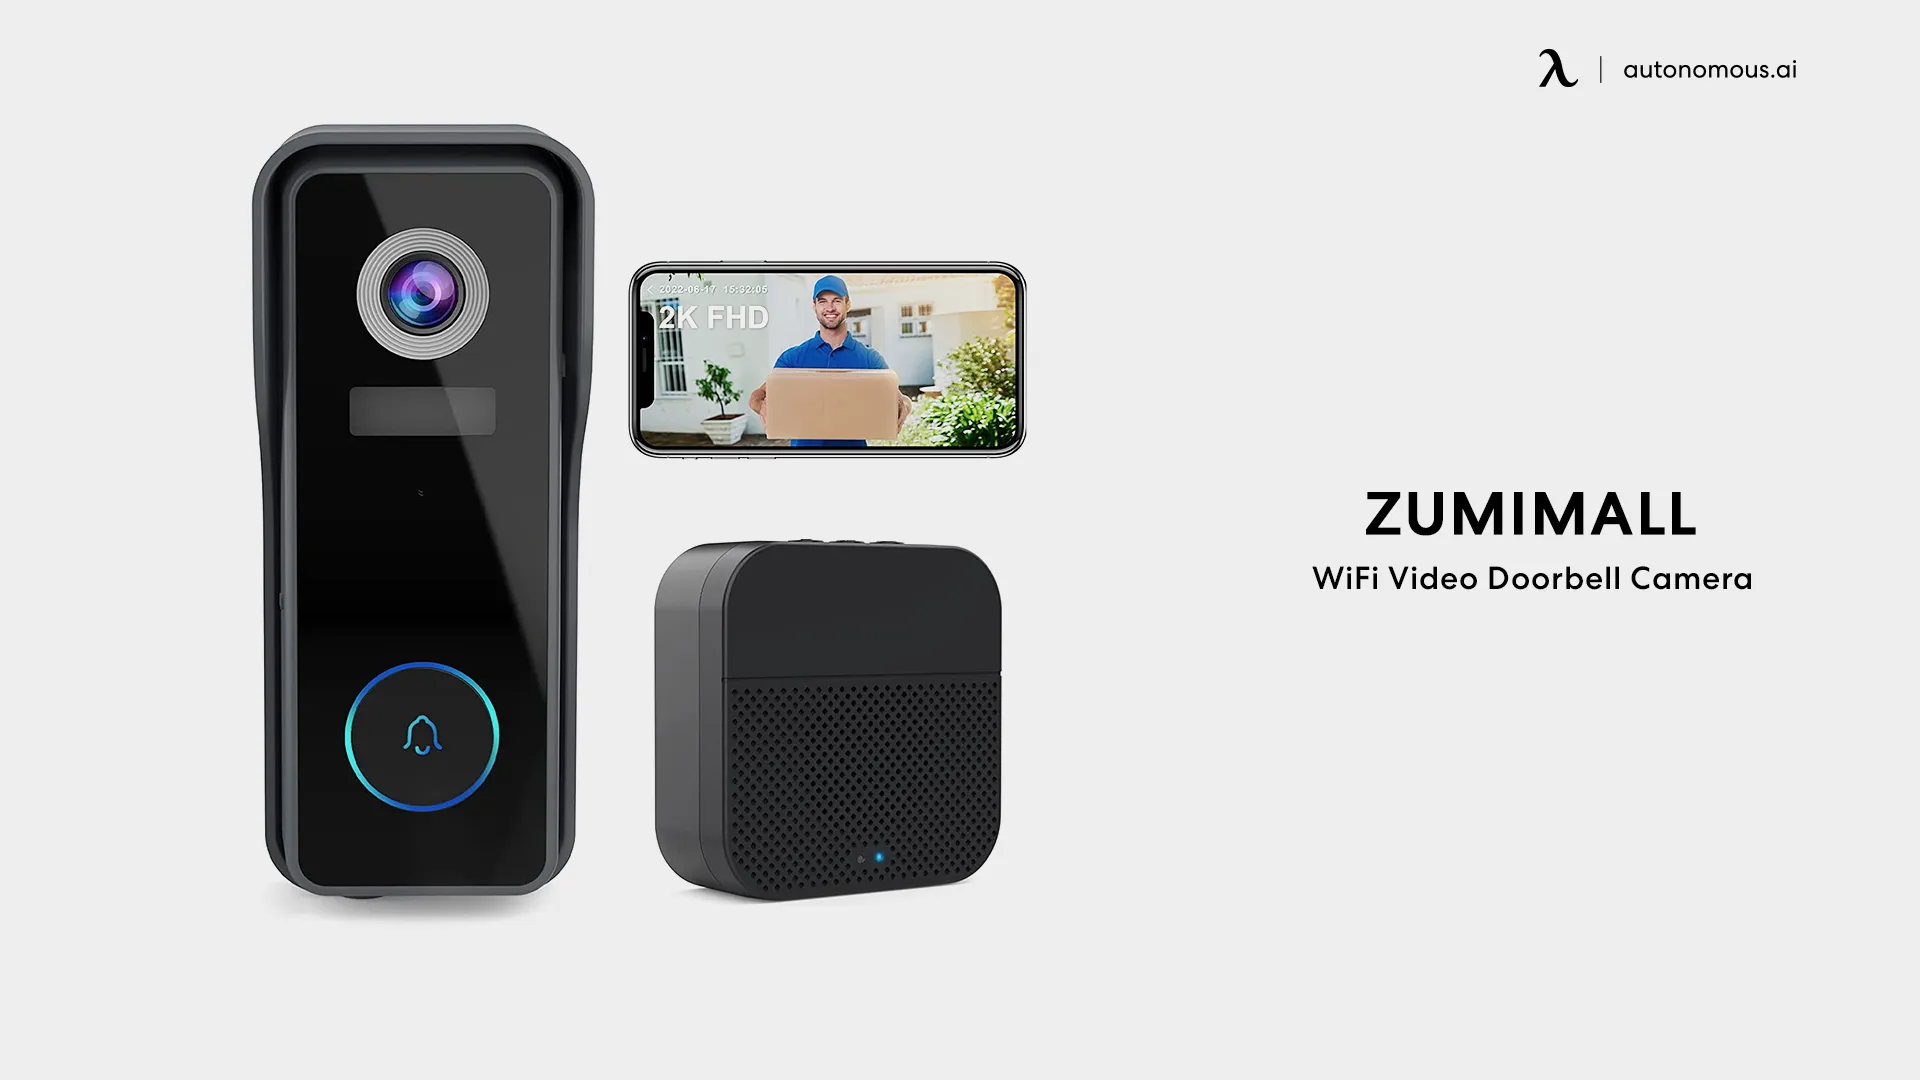 ZUMIMALL WiFi Video Doorbell Camera